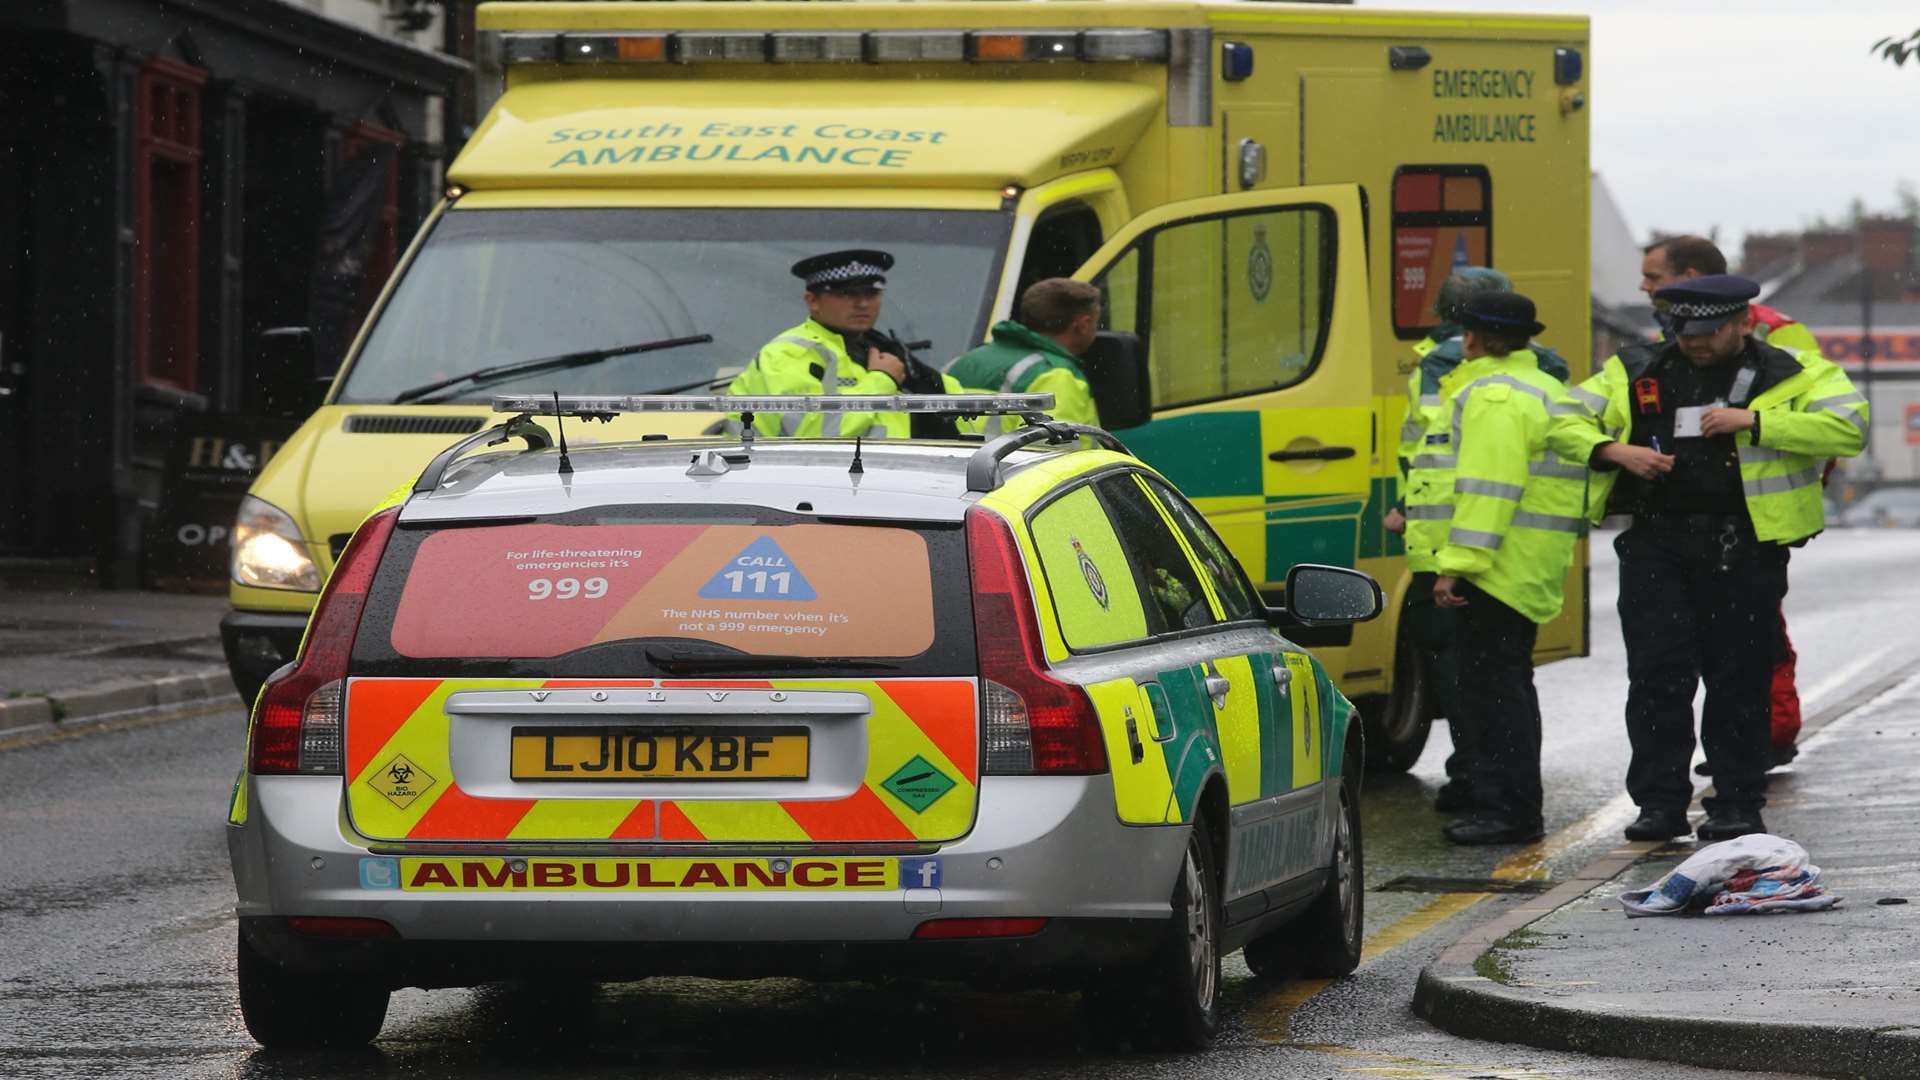 Ambulances were called. Picture: John Westhrop